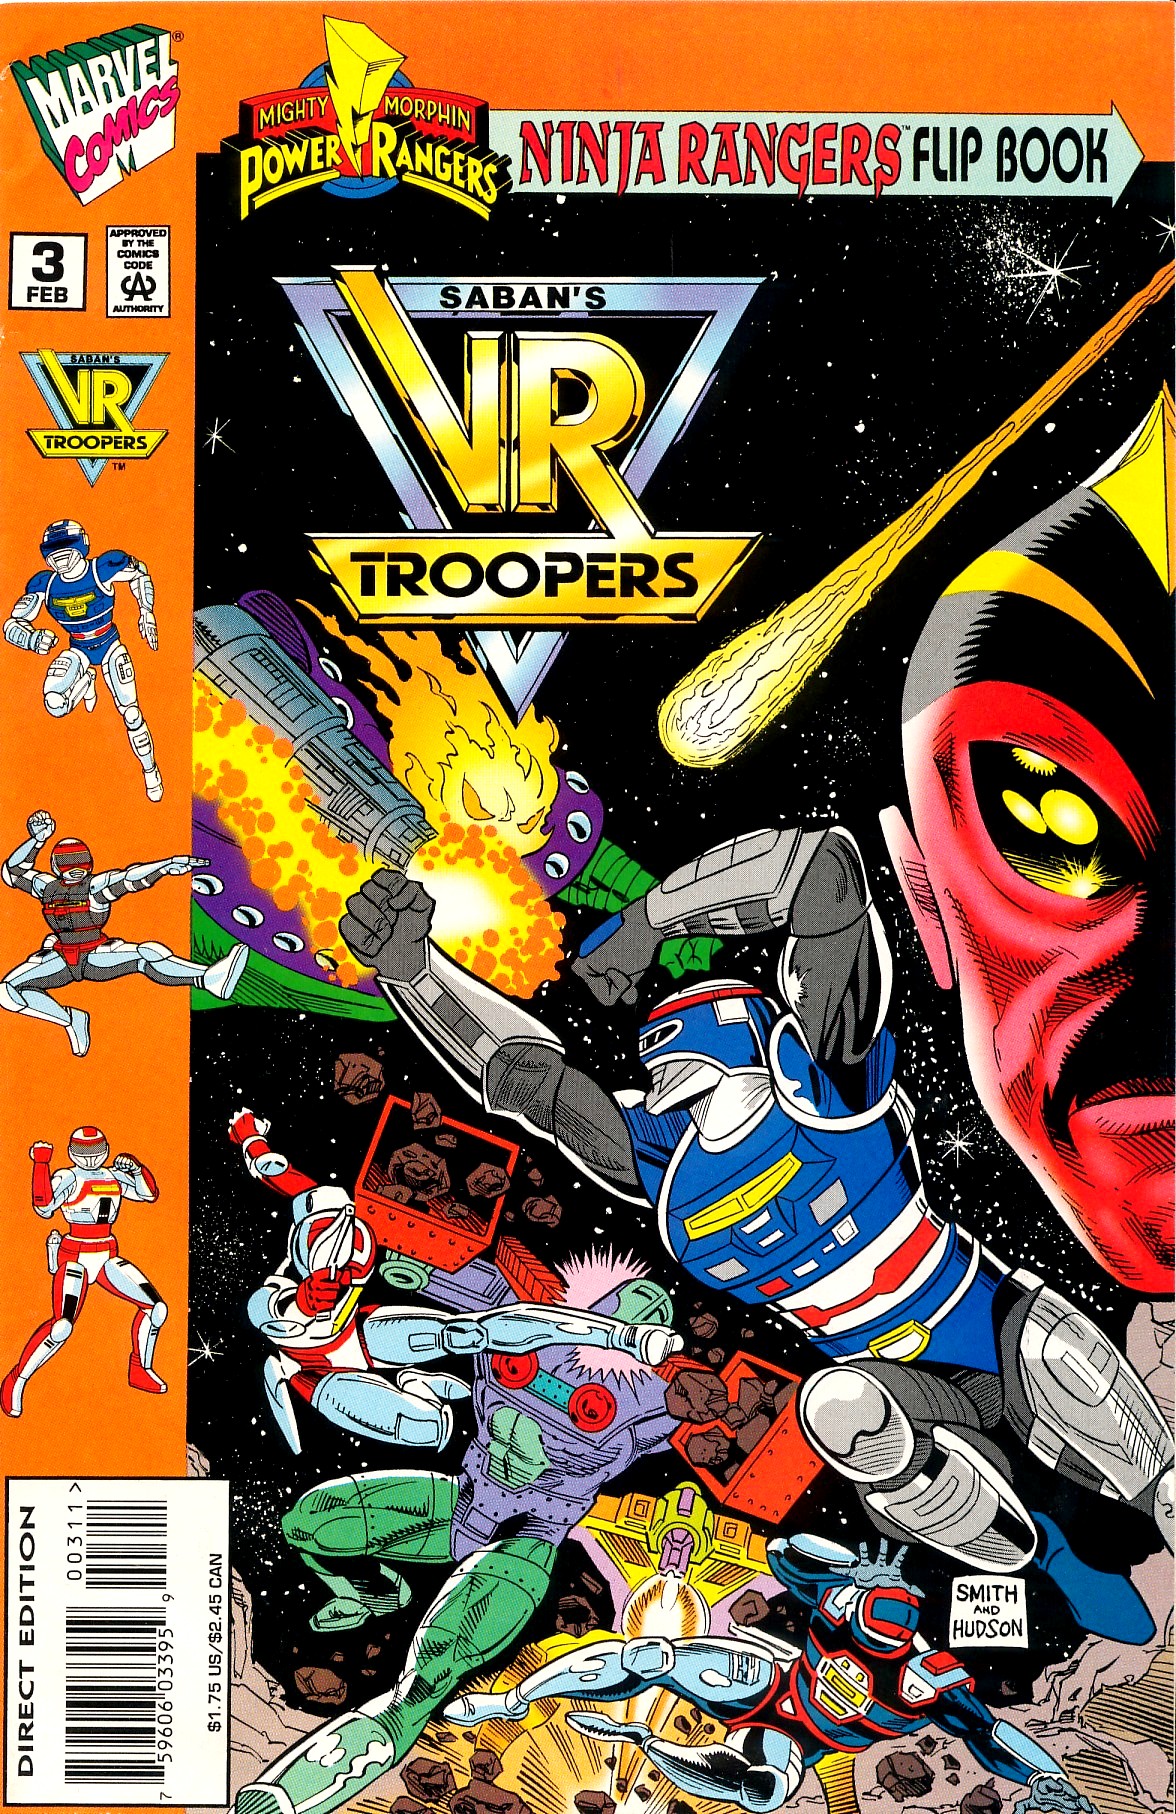 Read online Mighty Morphin Power Rangers: Ninja Rangers/VR Troopers comic -  Issue #3 - 19